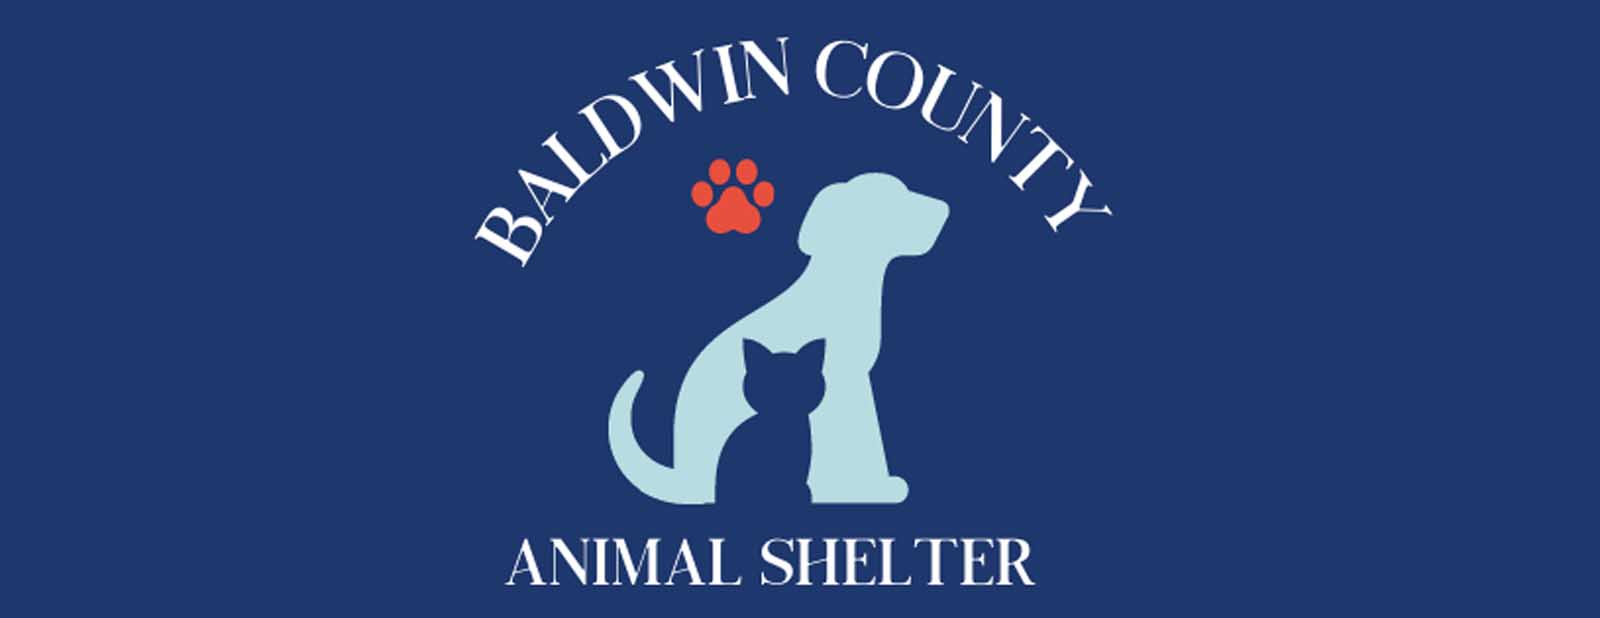 Baldwin County Animal Shelter Intake Building Opens